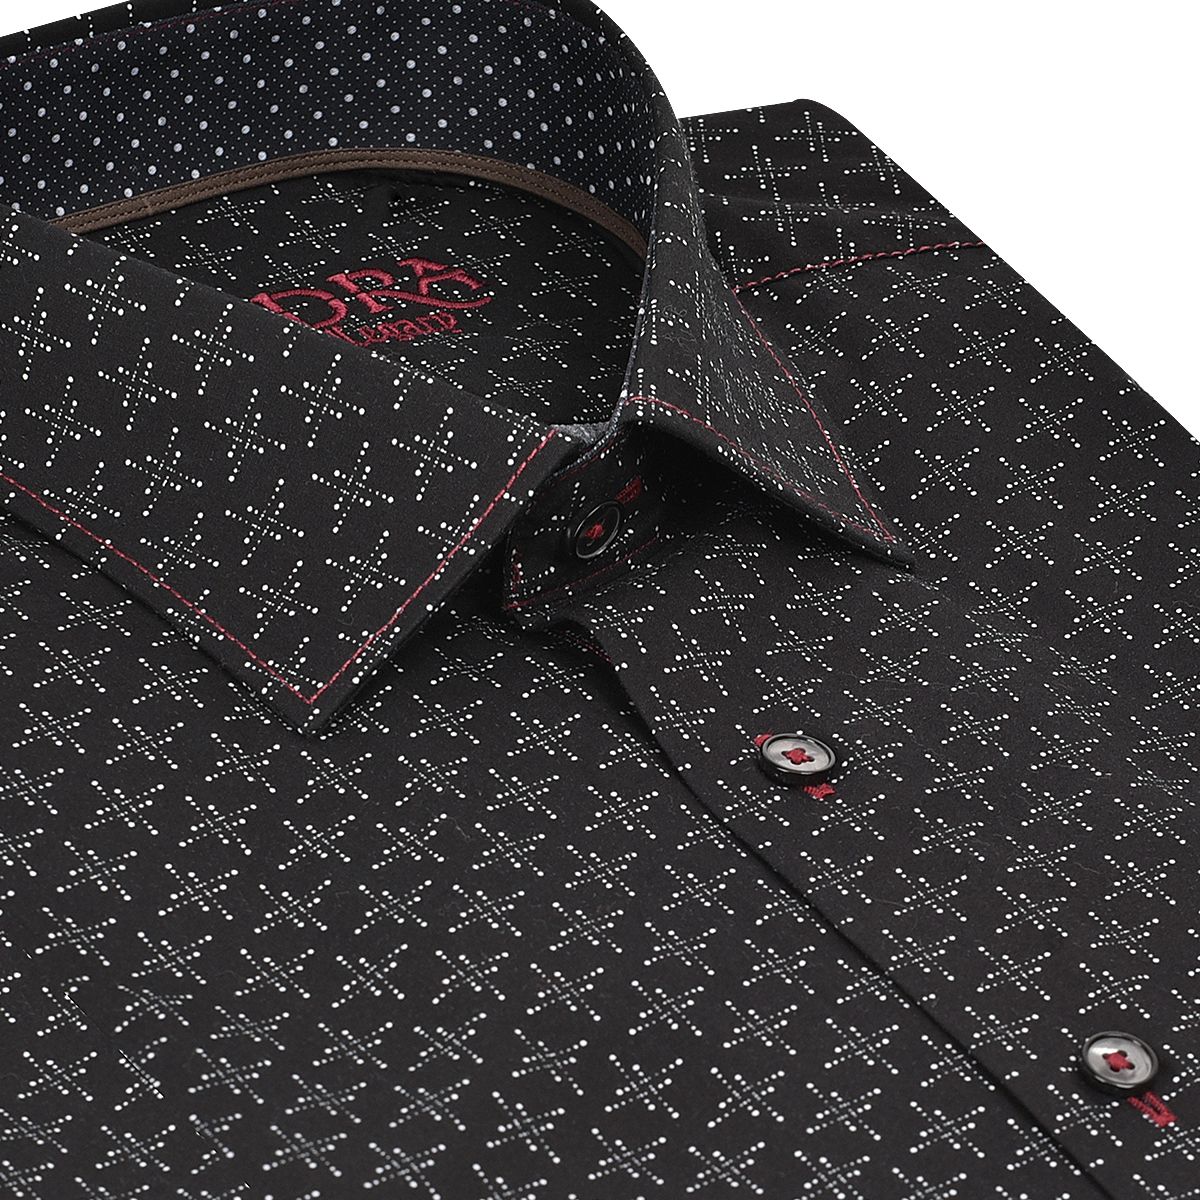 CM0W551 - Cuadra black casual fashion cotton shirt for men-Kuet.us